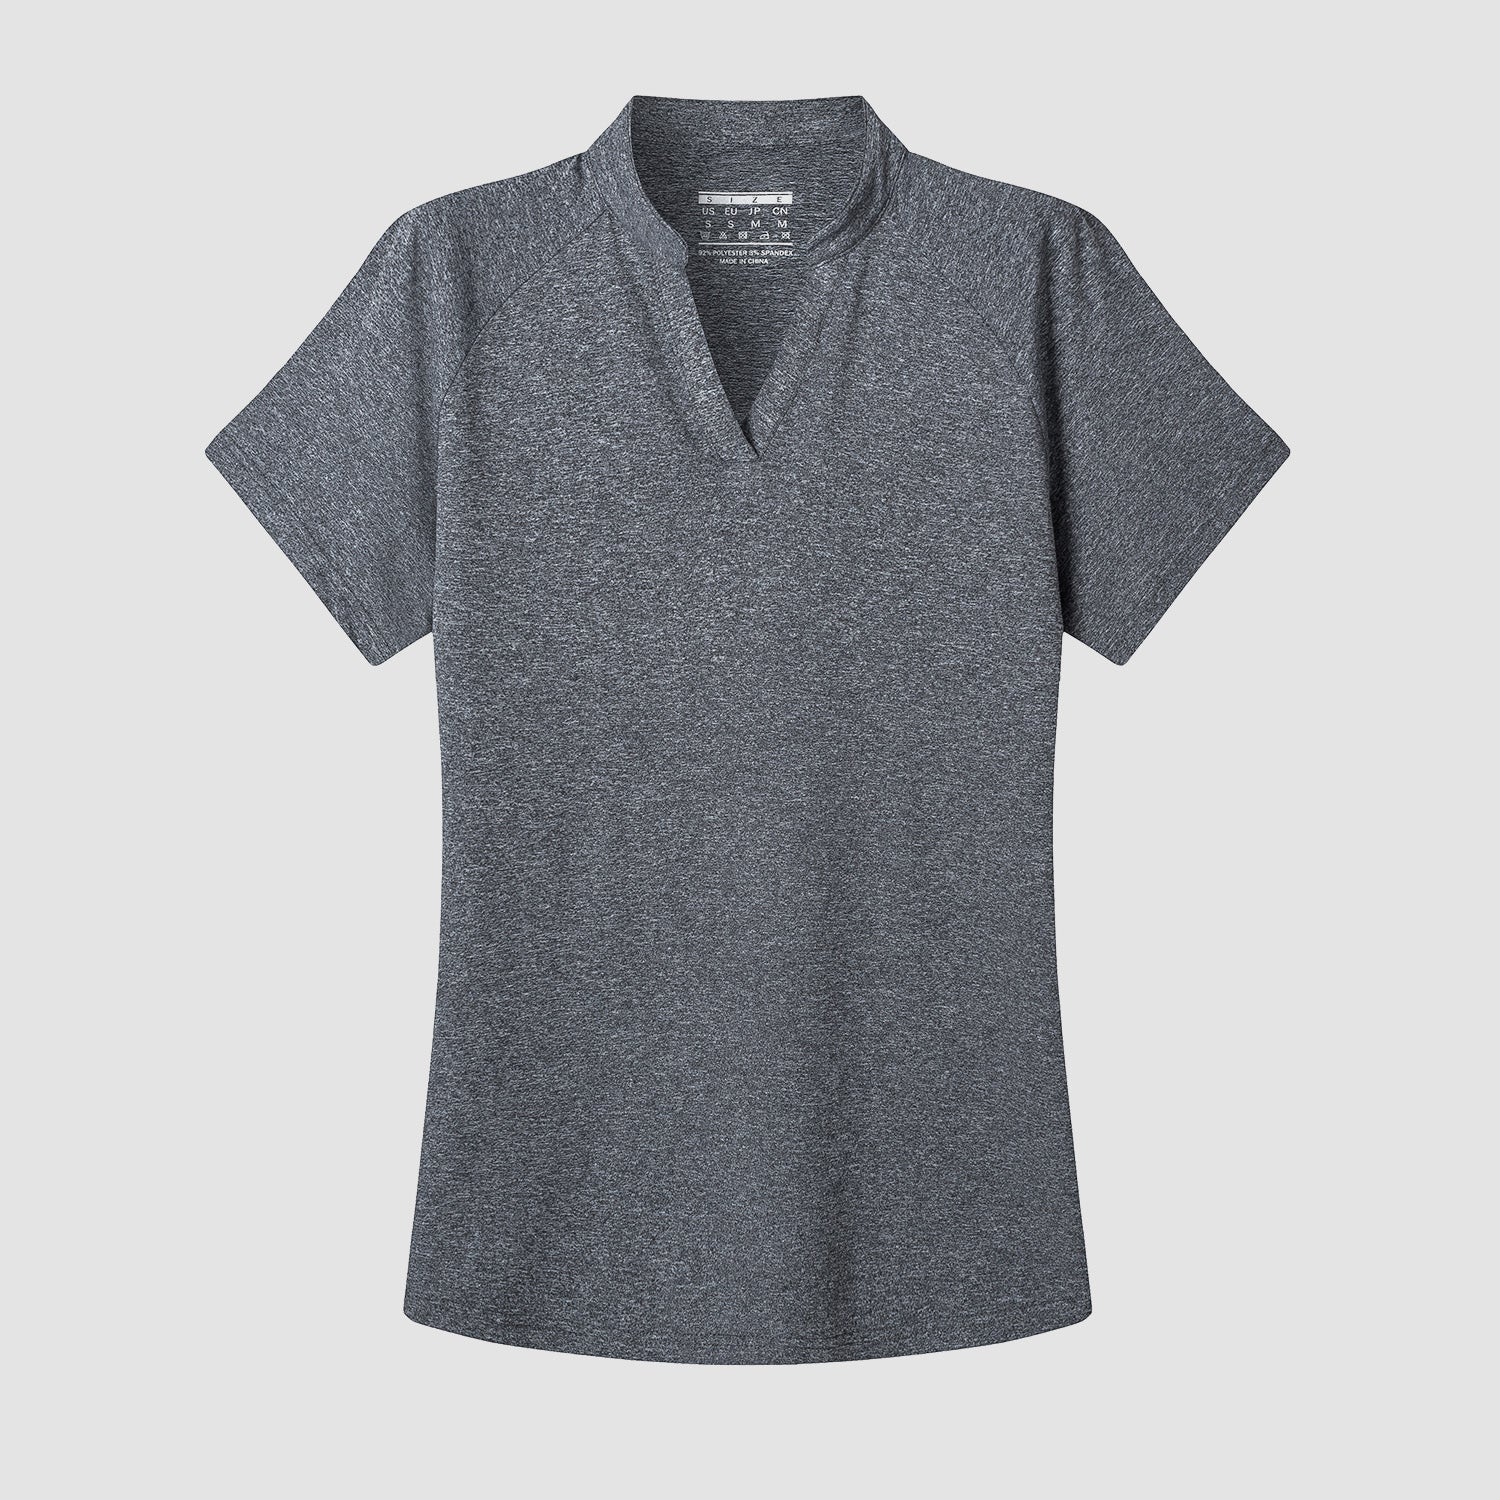 Women's T-Shirt V-Neck Short Sleeve Quick Dry Athletic Tee Shirt